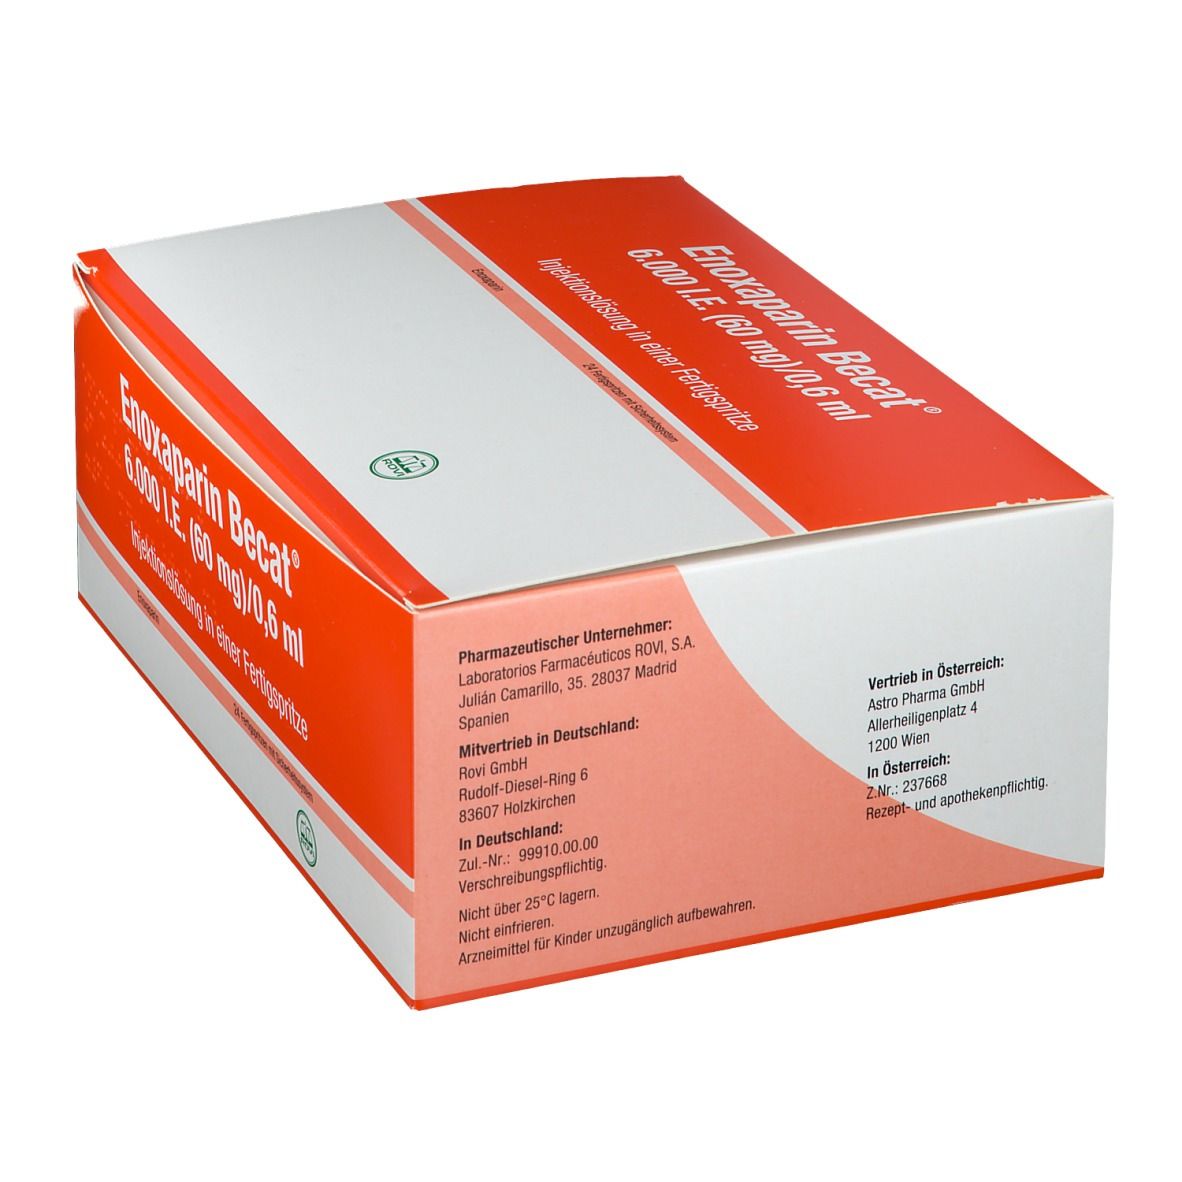 Enoxaparin Becat® 6.000 I.E. 60 mg/0,6 ml